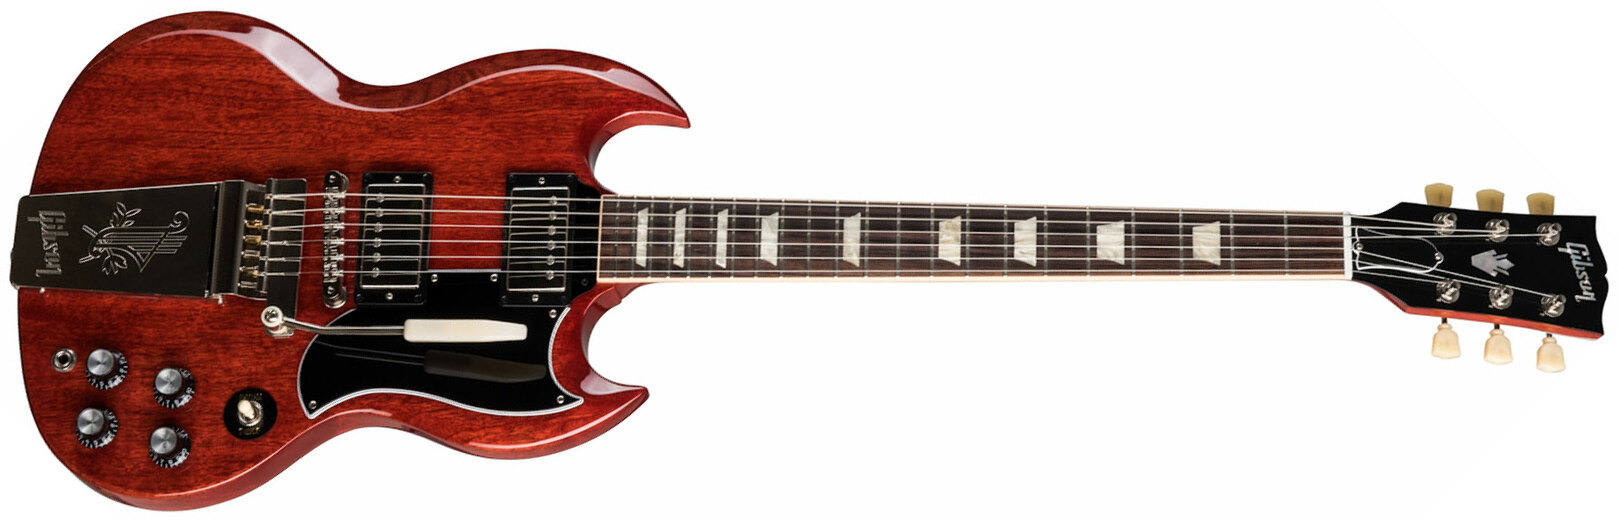 Gibson Sg Standard '61 Maestro Vibrola Original 2h Trem Rw - Retro rock electric guitar - Main picture